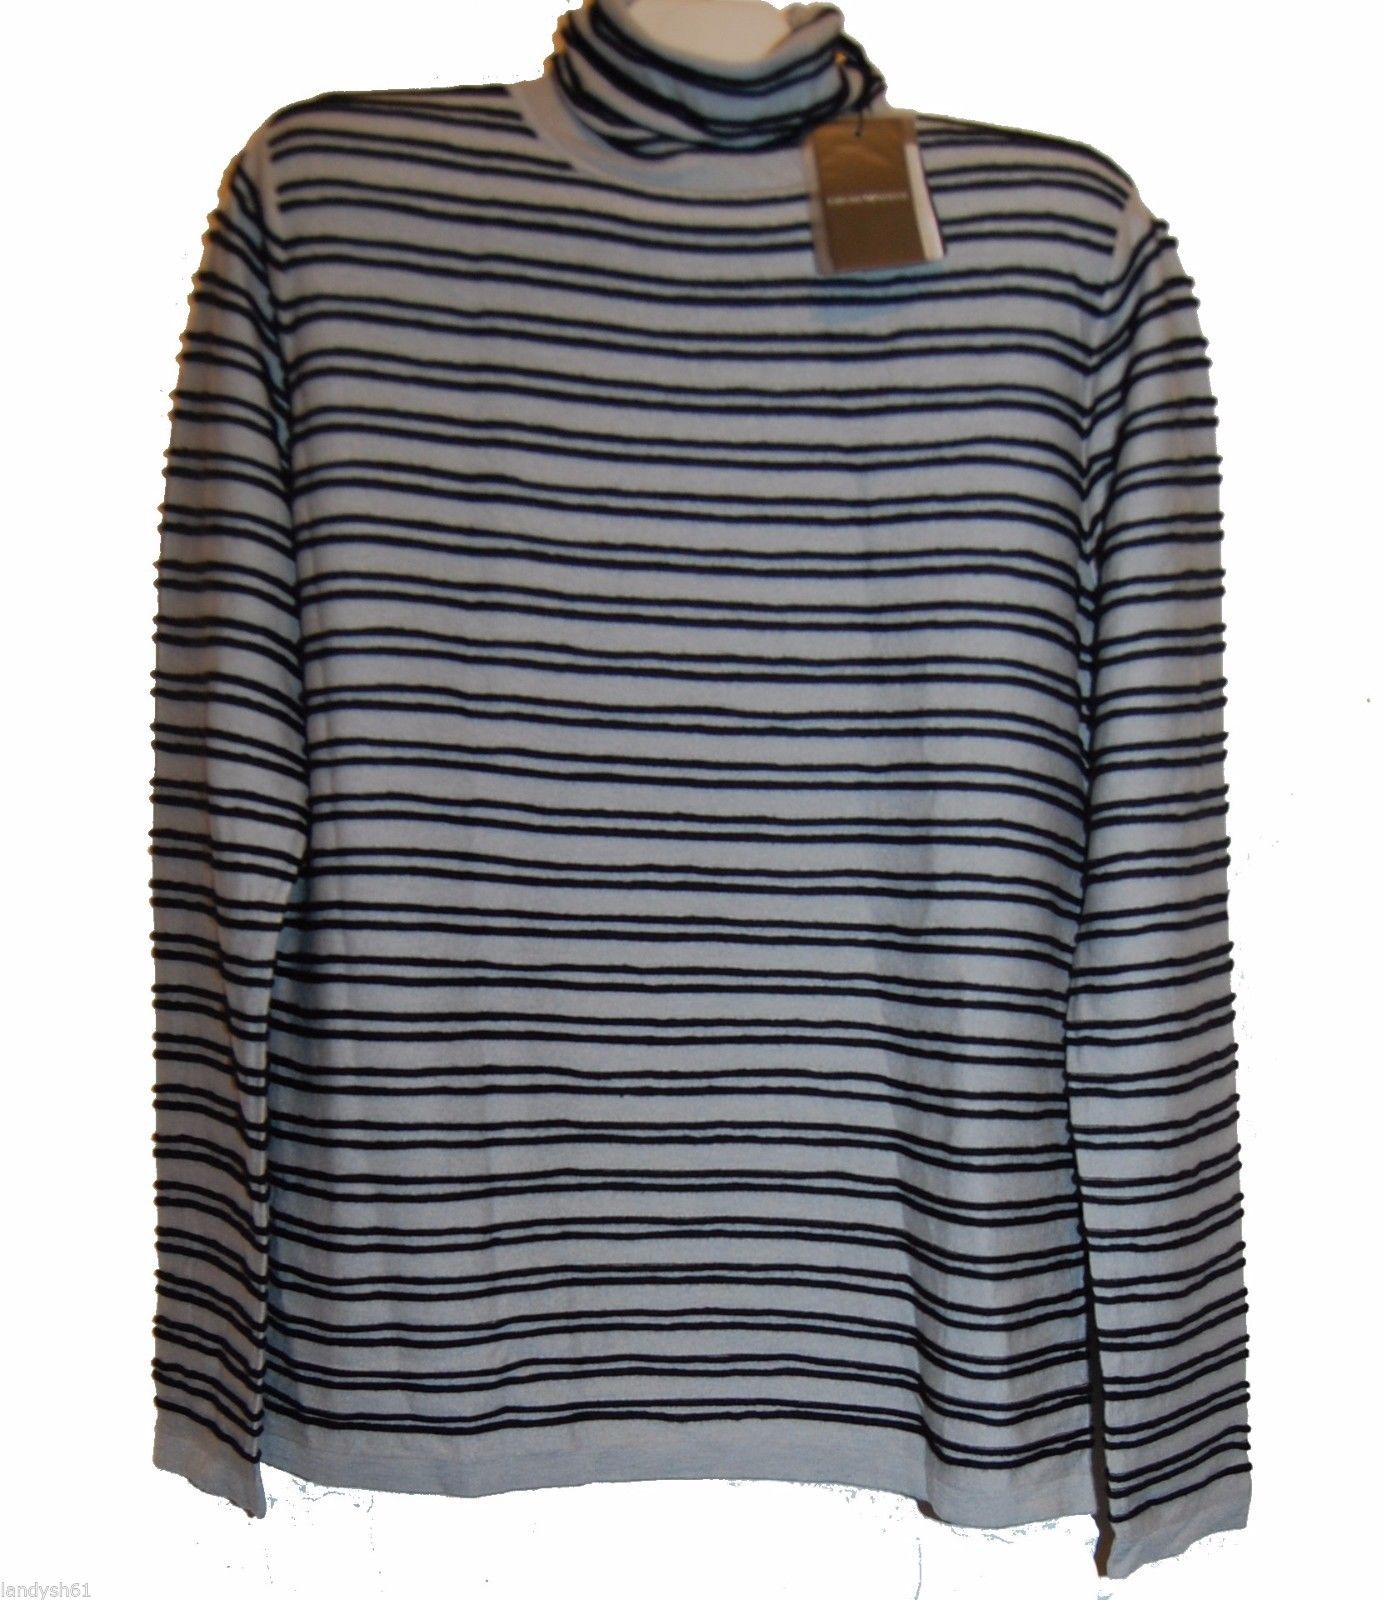 Emporio Armani Men's Gray Black Striped Wool Silk Sweater Size US 46 EU 56 $495 - $261.61